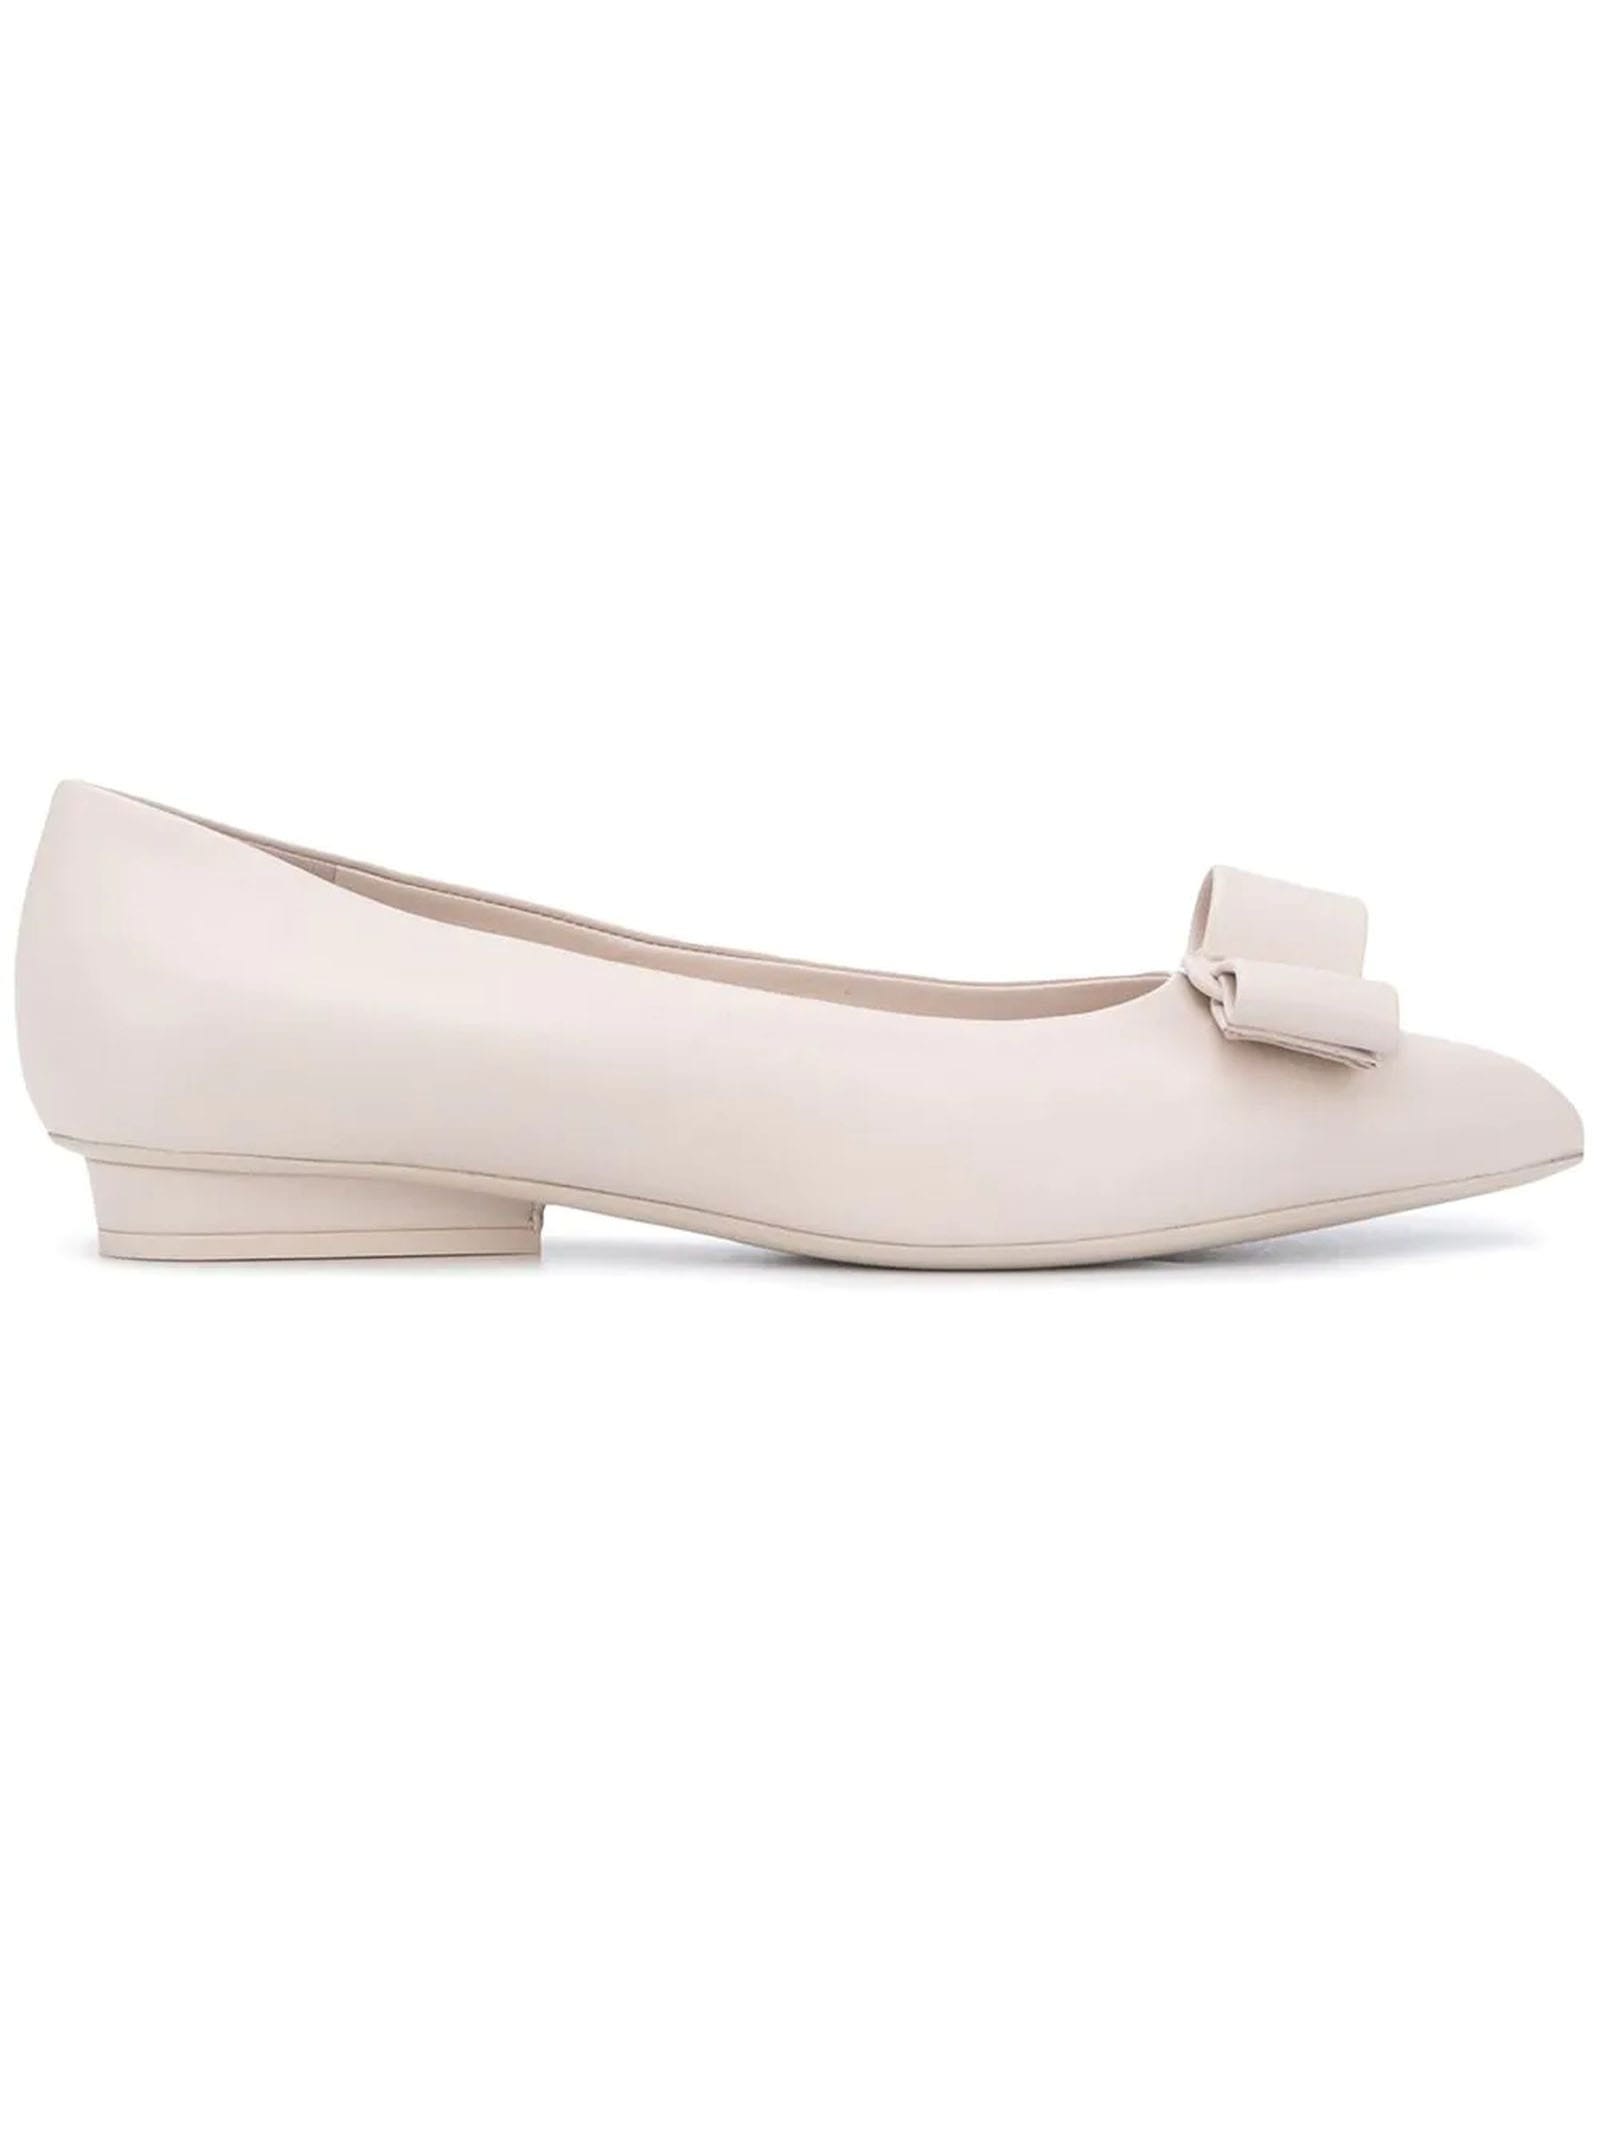 Ferragamo Bone White Leather Viva Ballerina Shoes